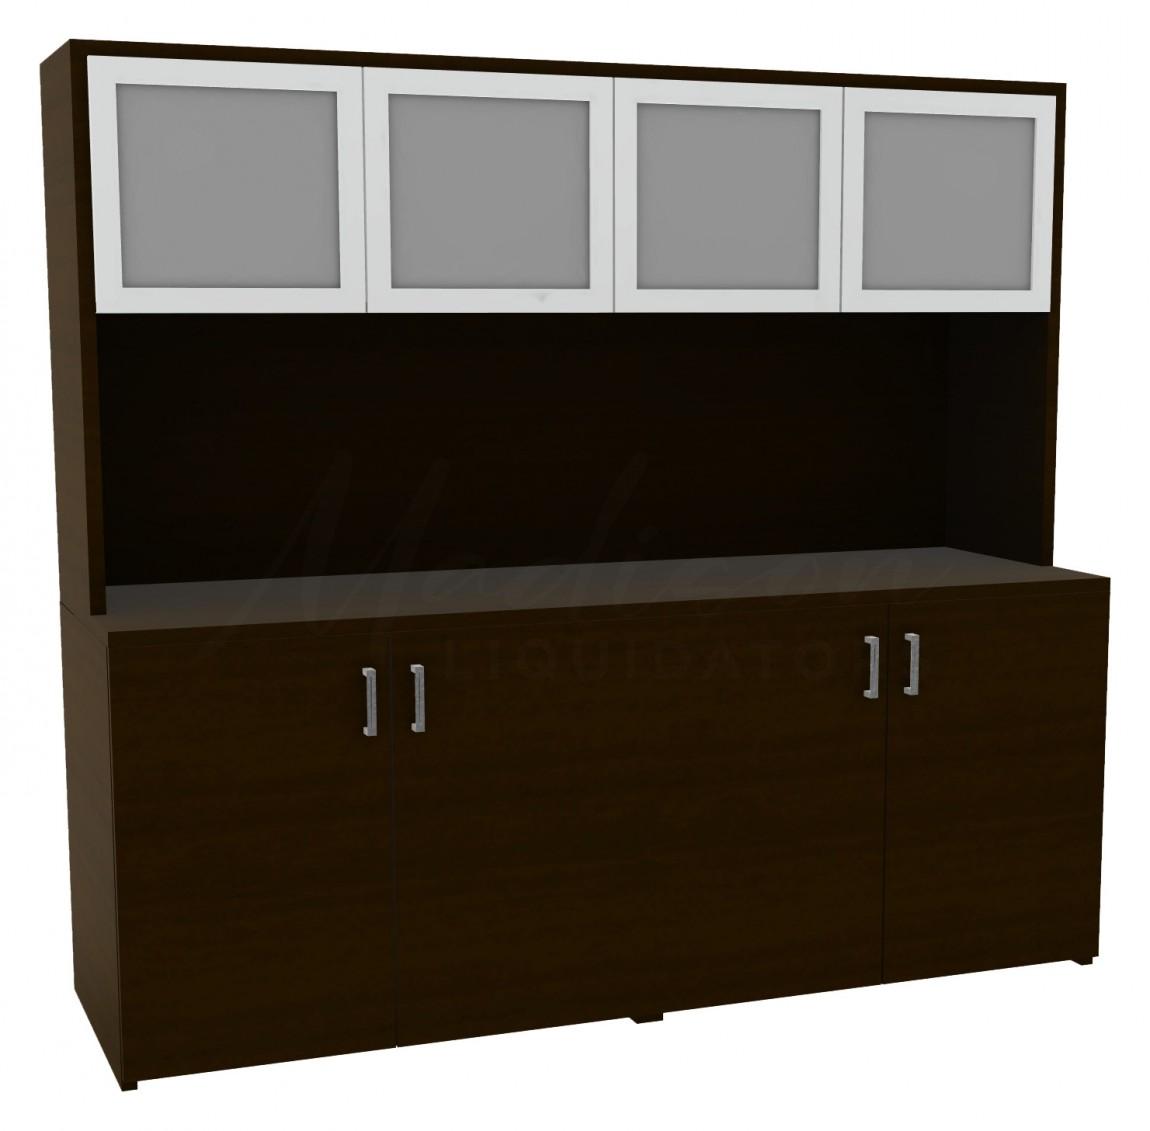 Credenza Storage Cabinet with Hutch